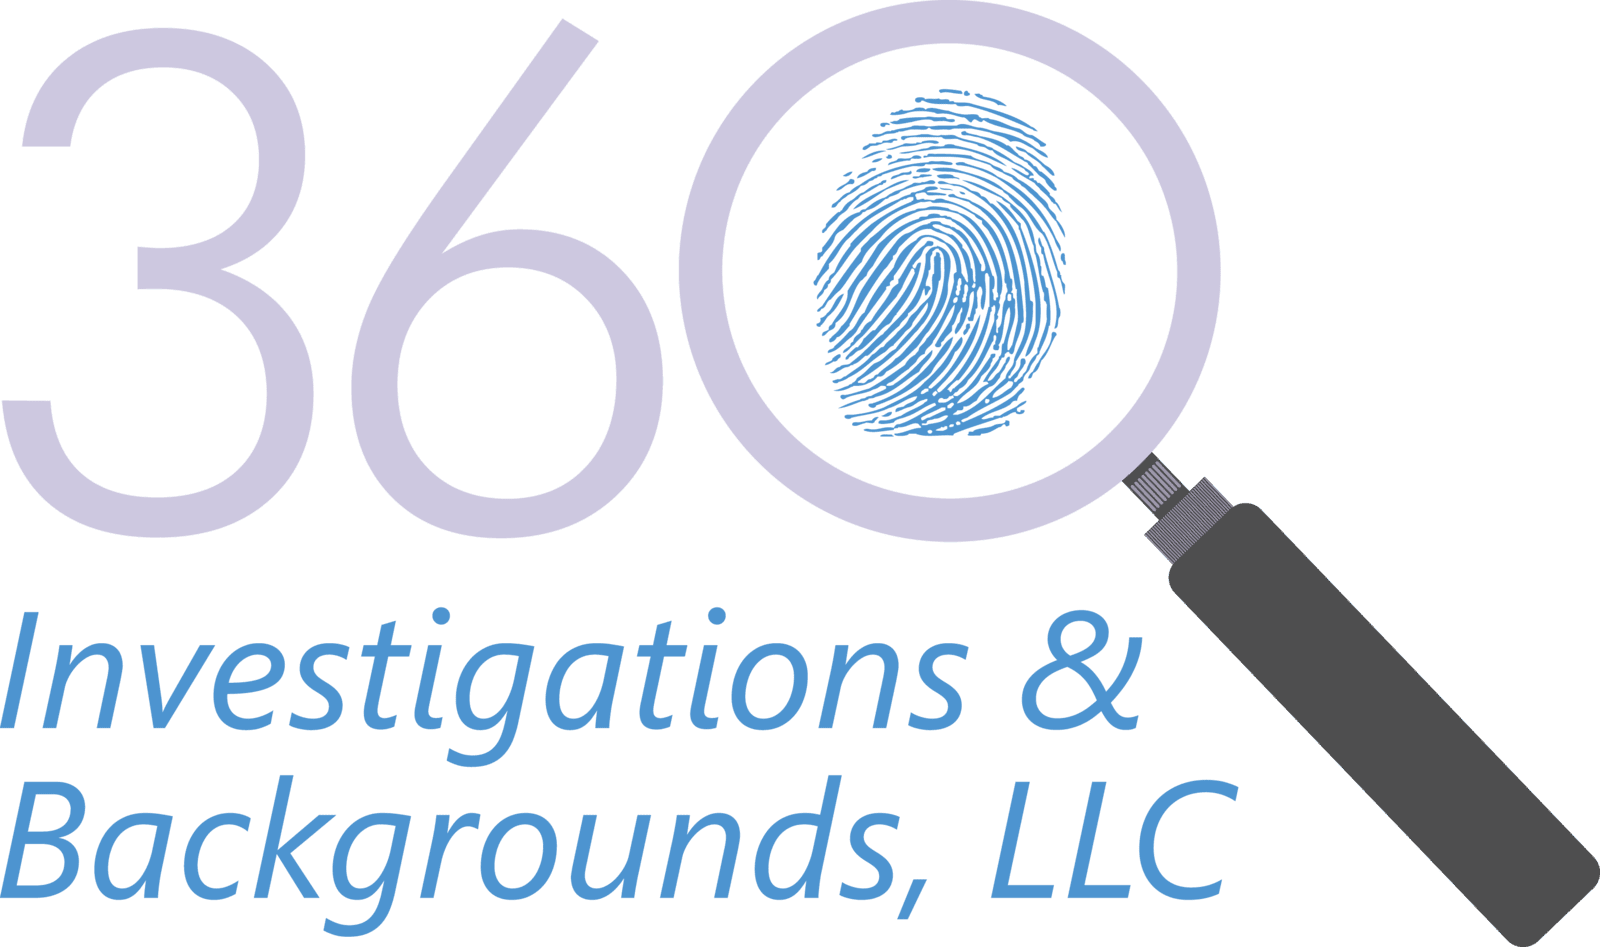 360 Investigations & Backgrounds, LLC